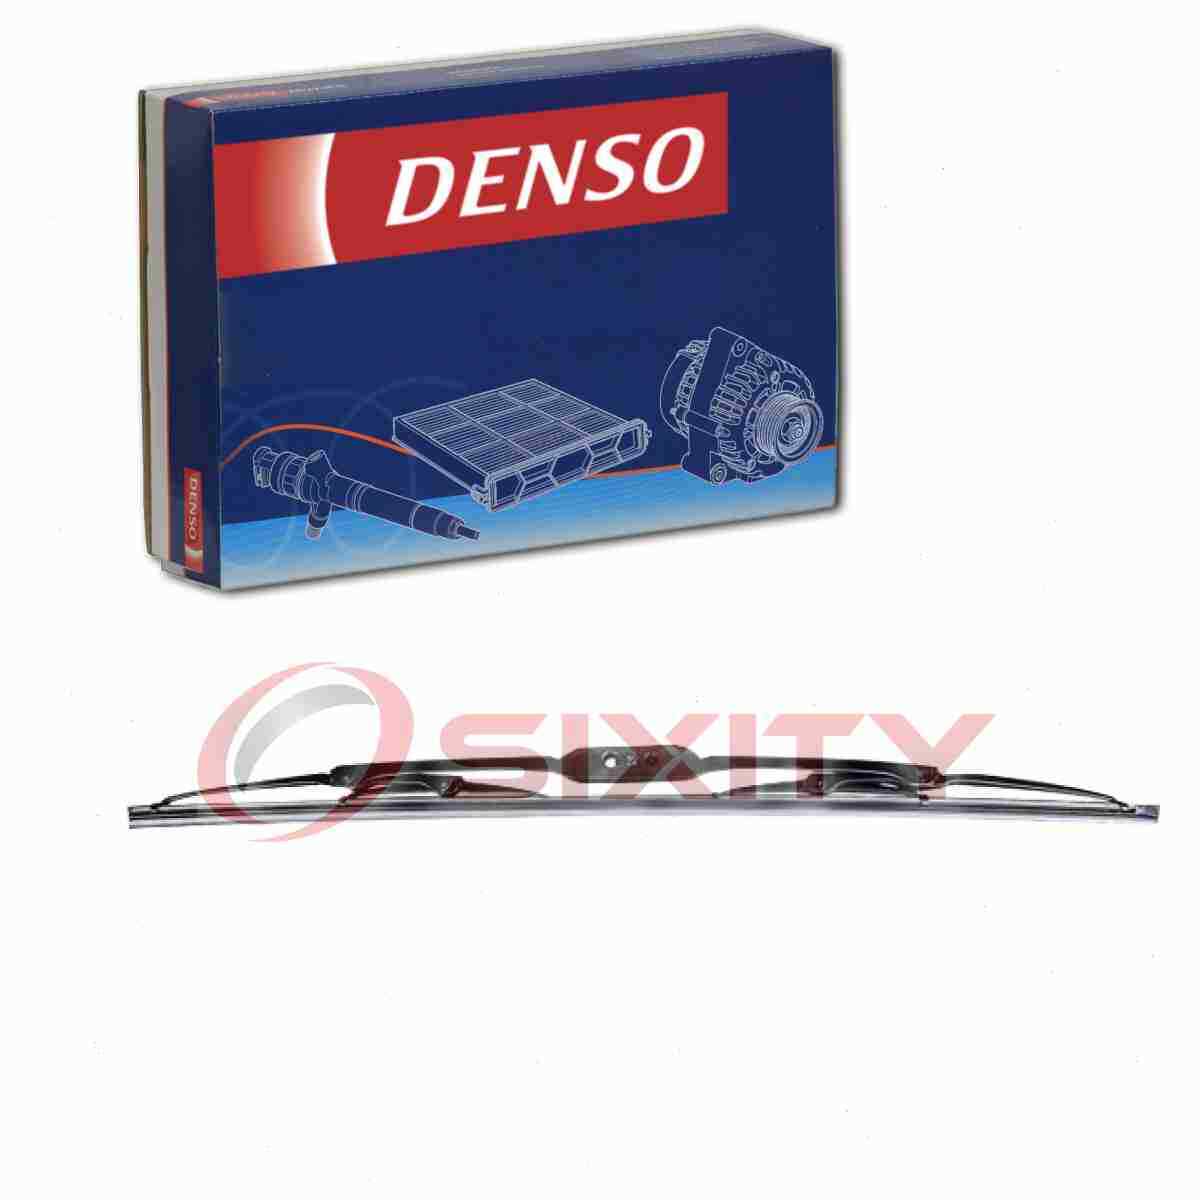 Denso Front Left Wiper Blade for 1978-1986 Oldsmobile Cutlass Salon kw